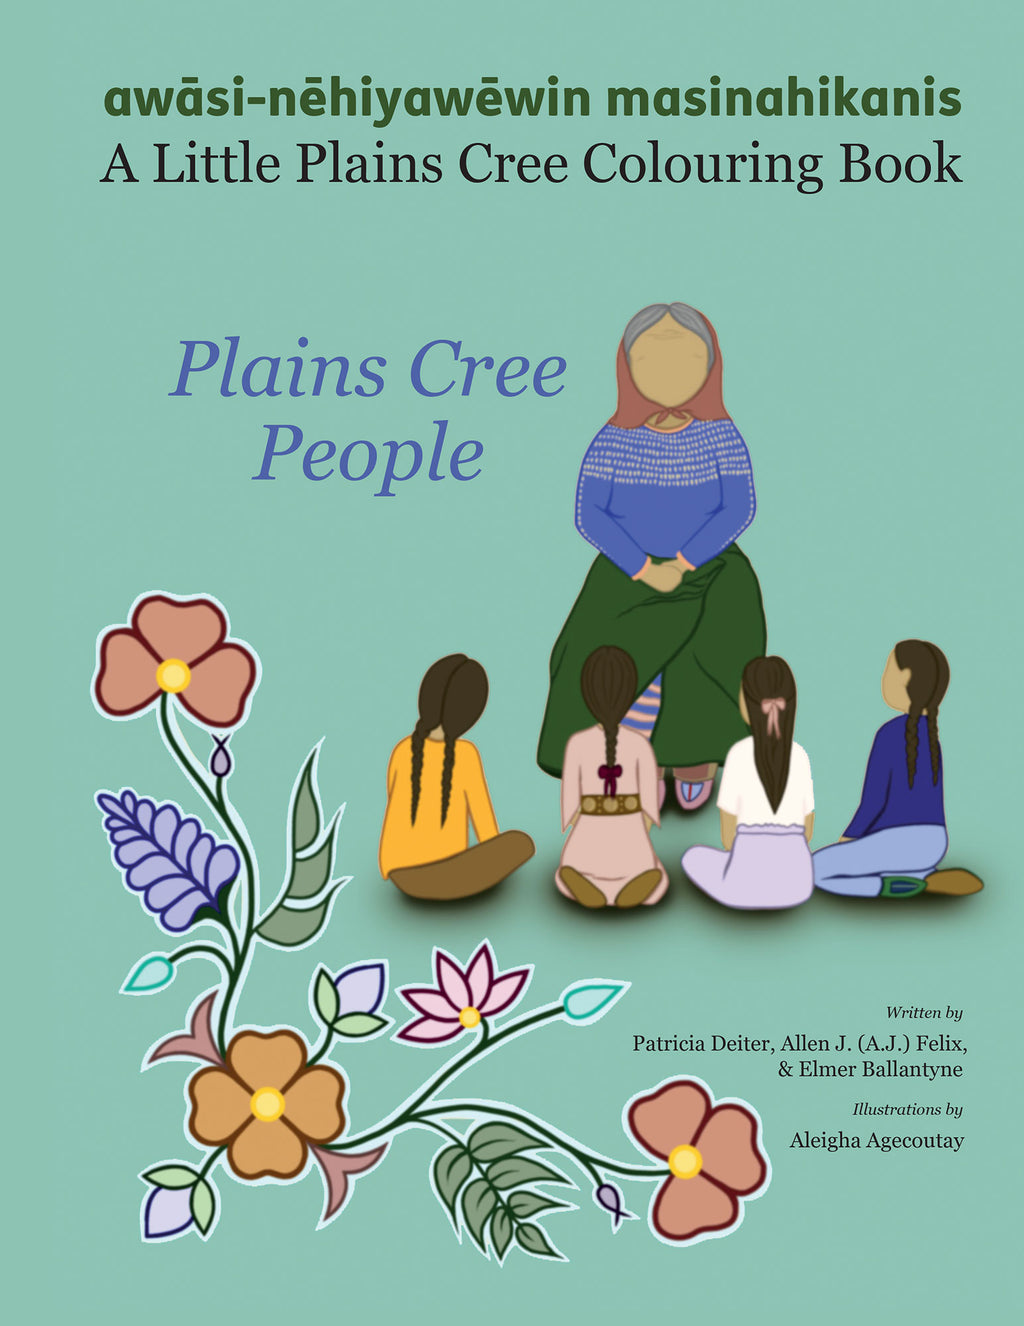 A Little Plains Cree Colouring Book Patricia Deiter, A.J. Felix, & Elmer Ballantyne (Your Nickel's Worth Publishing)